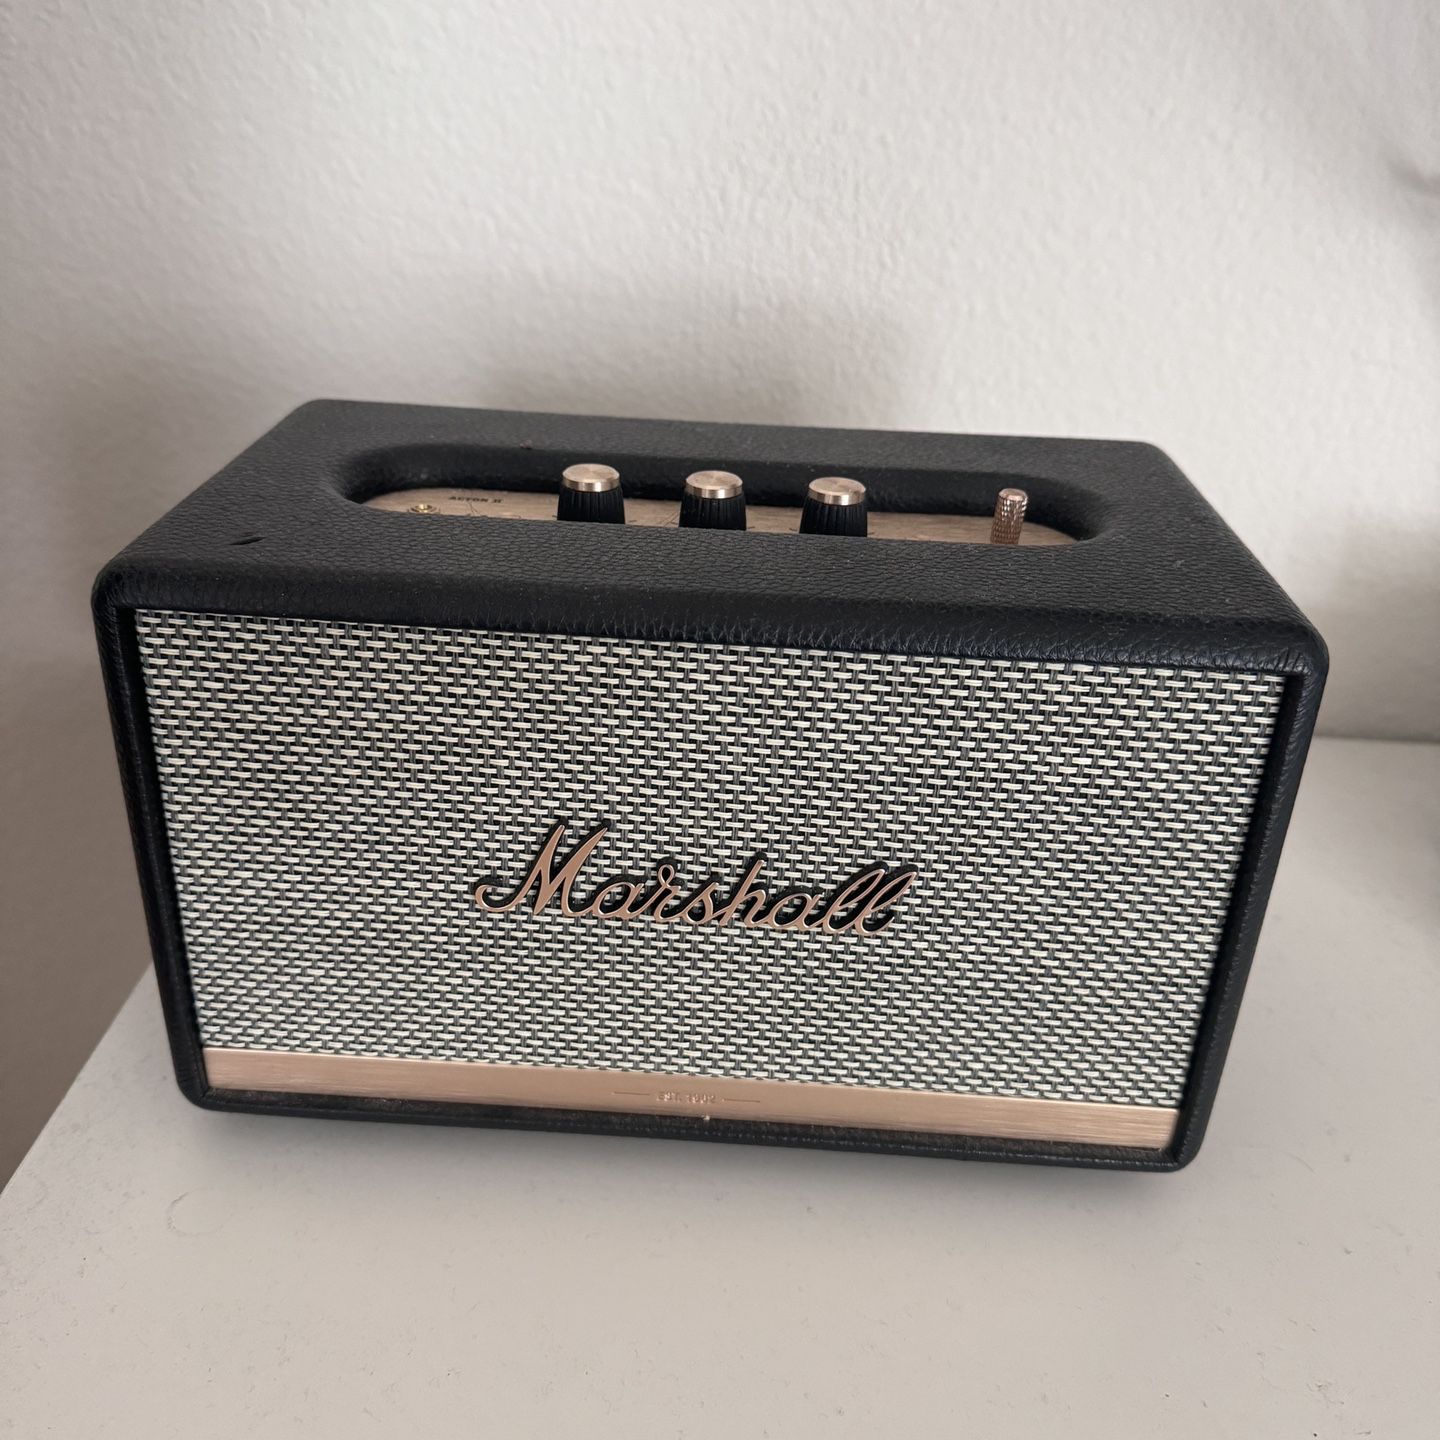 Marshall speaker